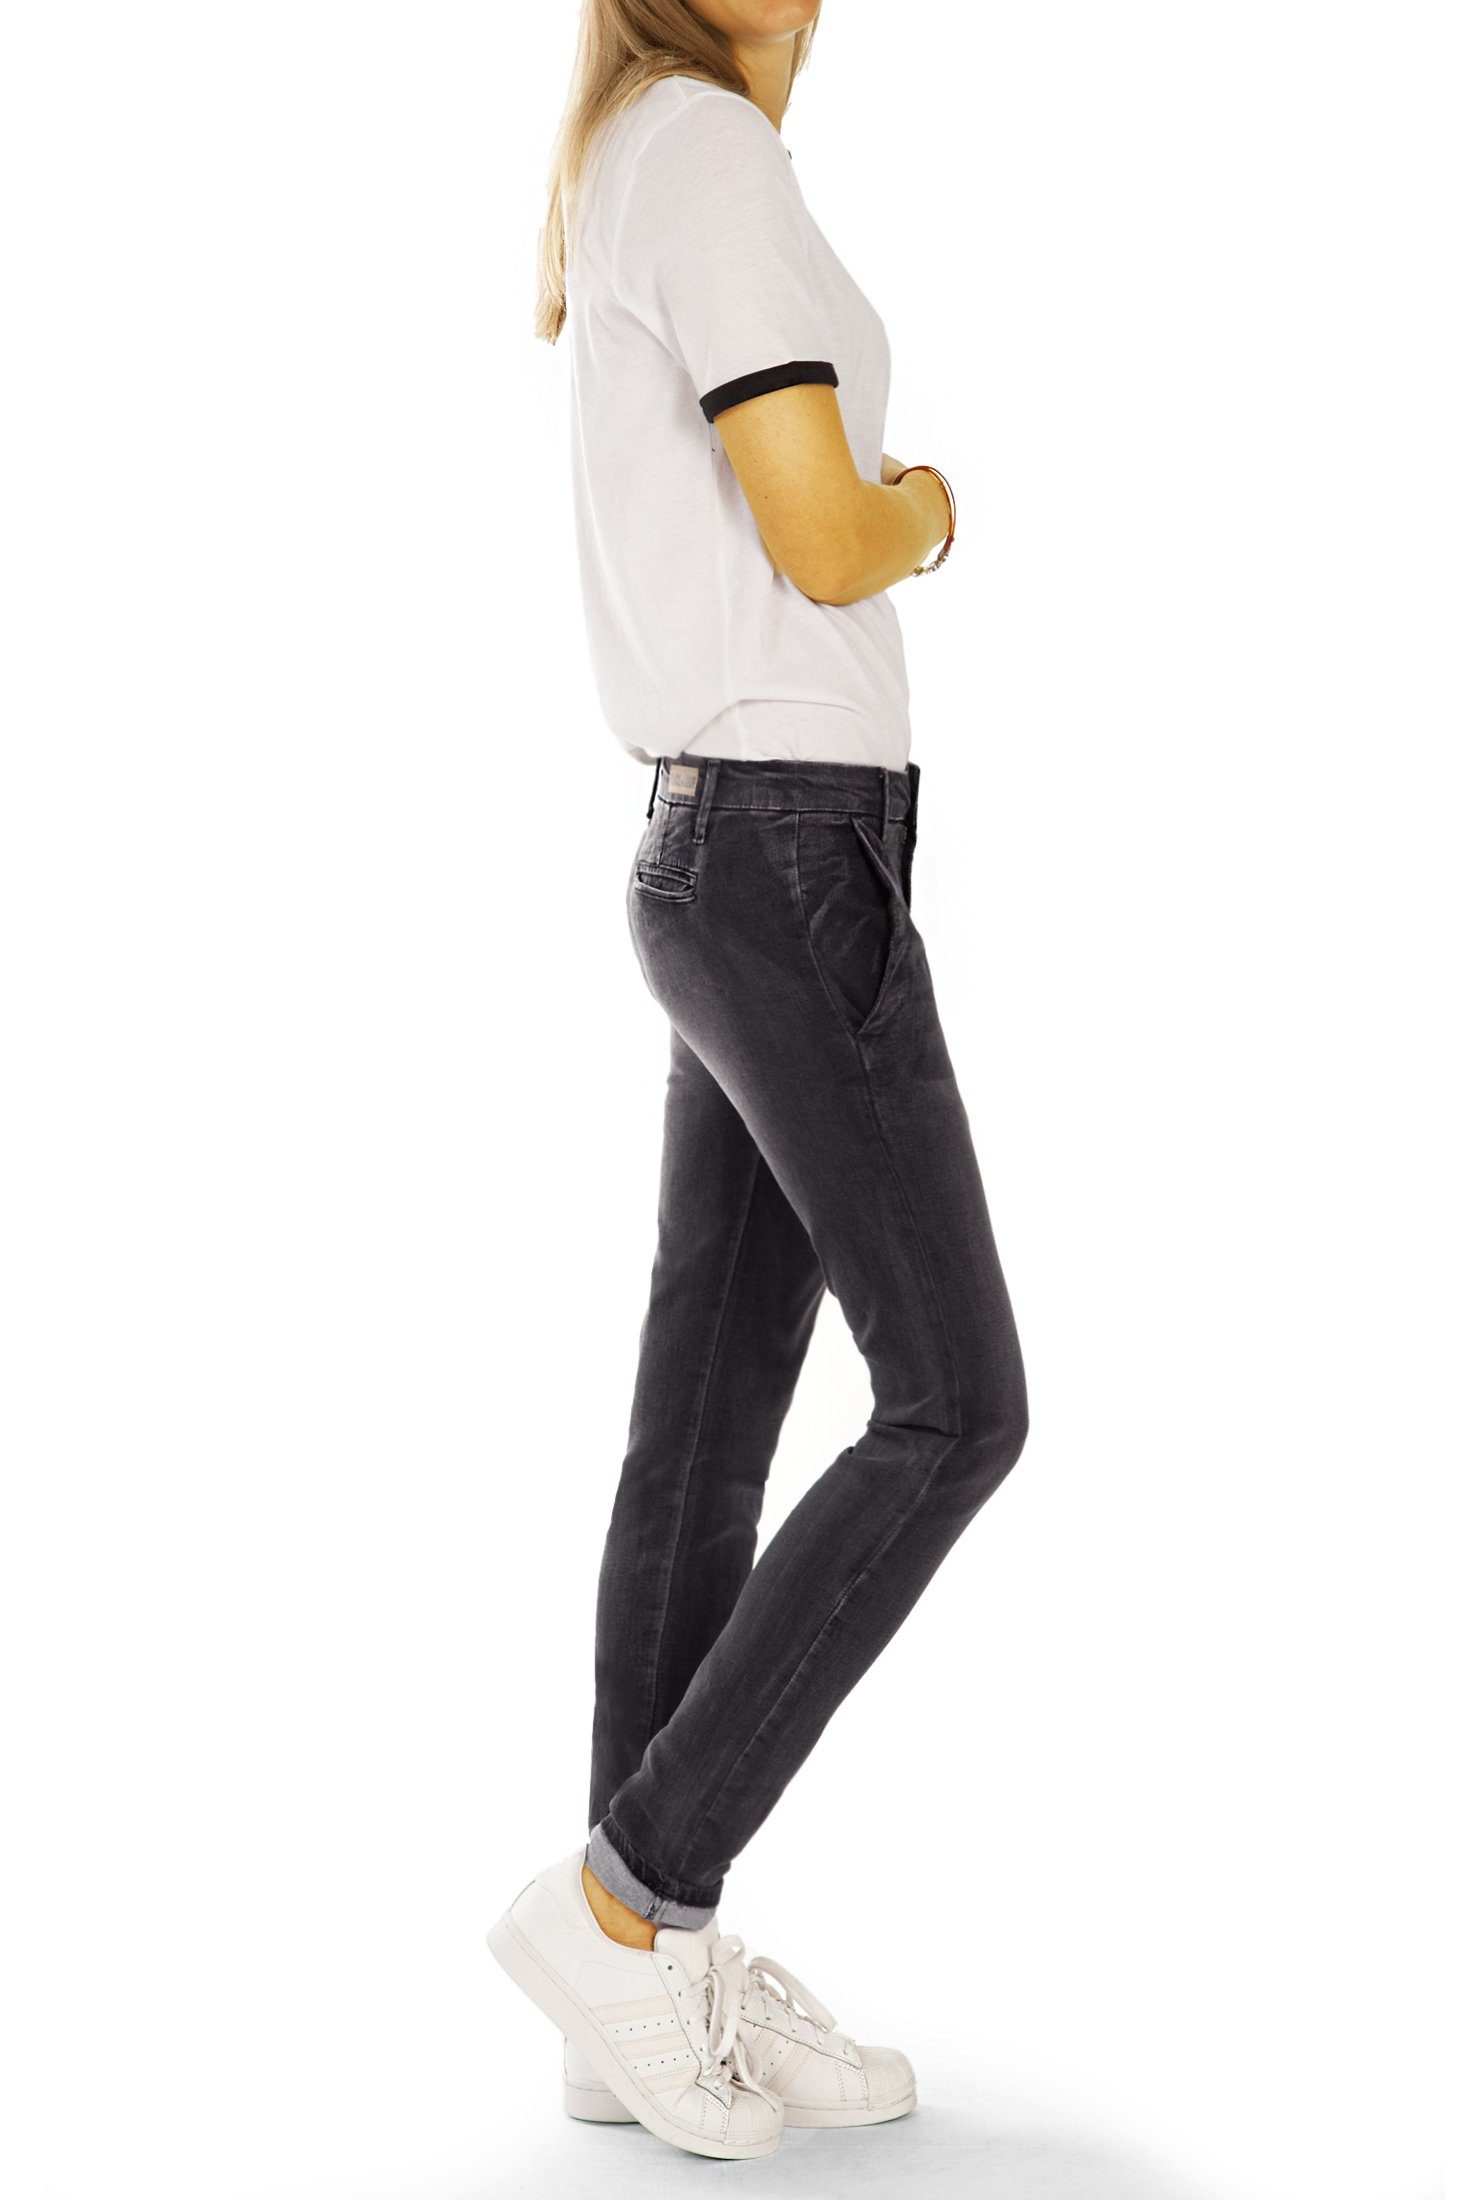 Damen - Hose Stretch, styled Hüftige be - j10m-3 Chinohose mit in grau Hüfthosen Unifarben Stoffhosen Chino